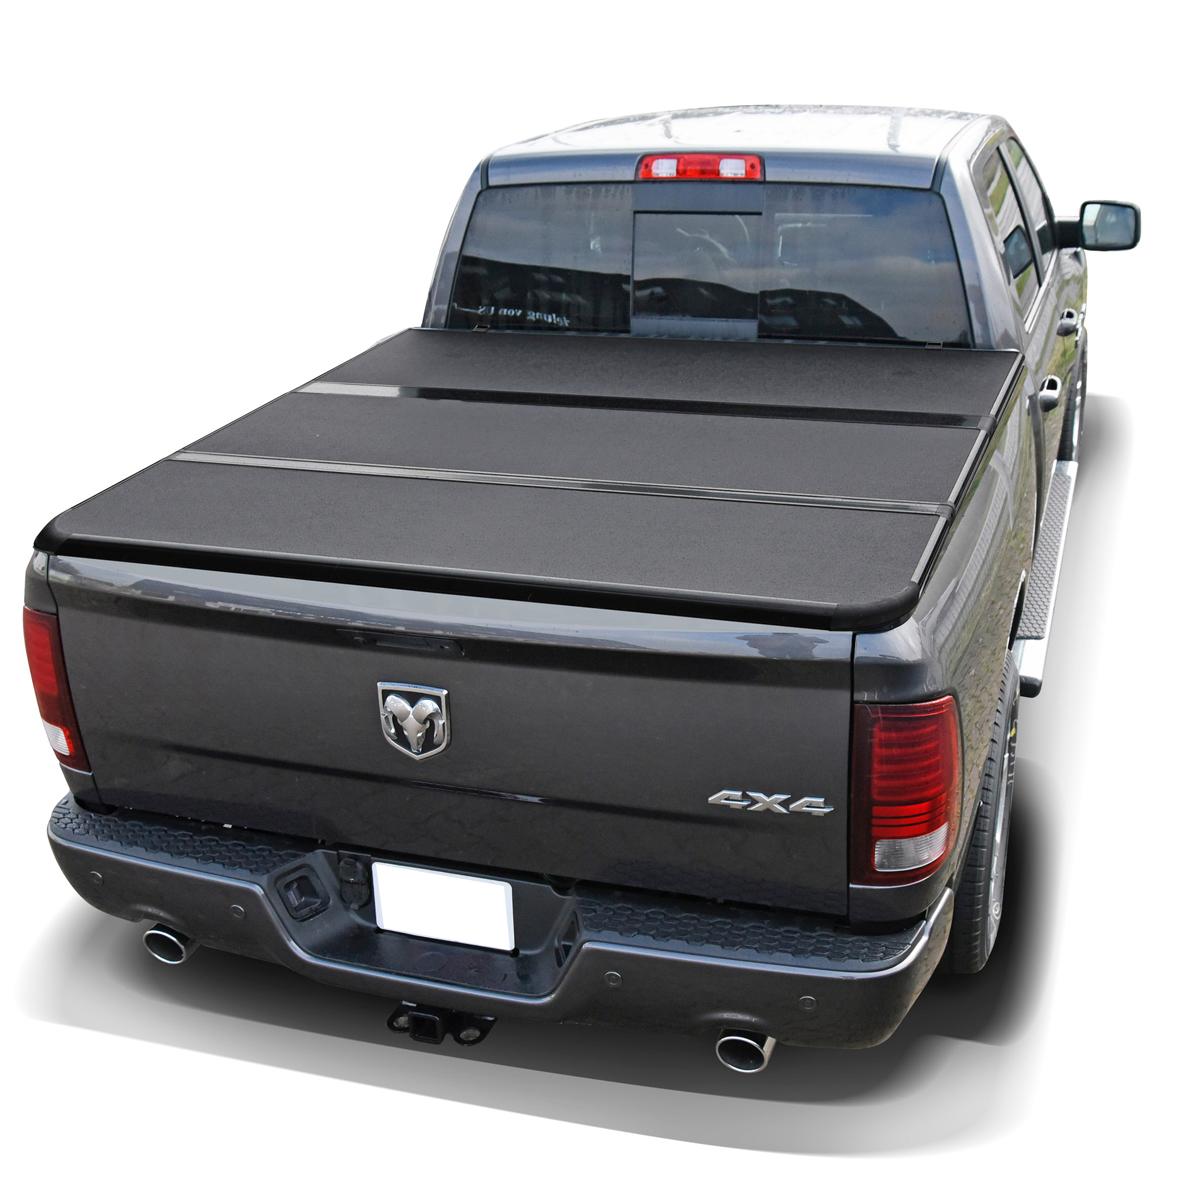 Som orm princip Klappbare Aluminium Abdeckung TriFold Dodge Ram 1500 Long Bed 2009 bis 2017